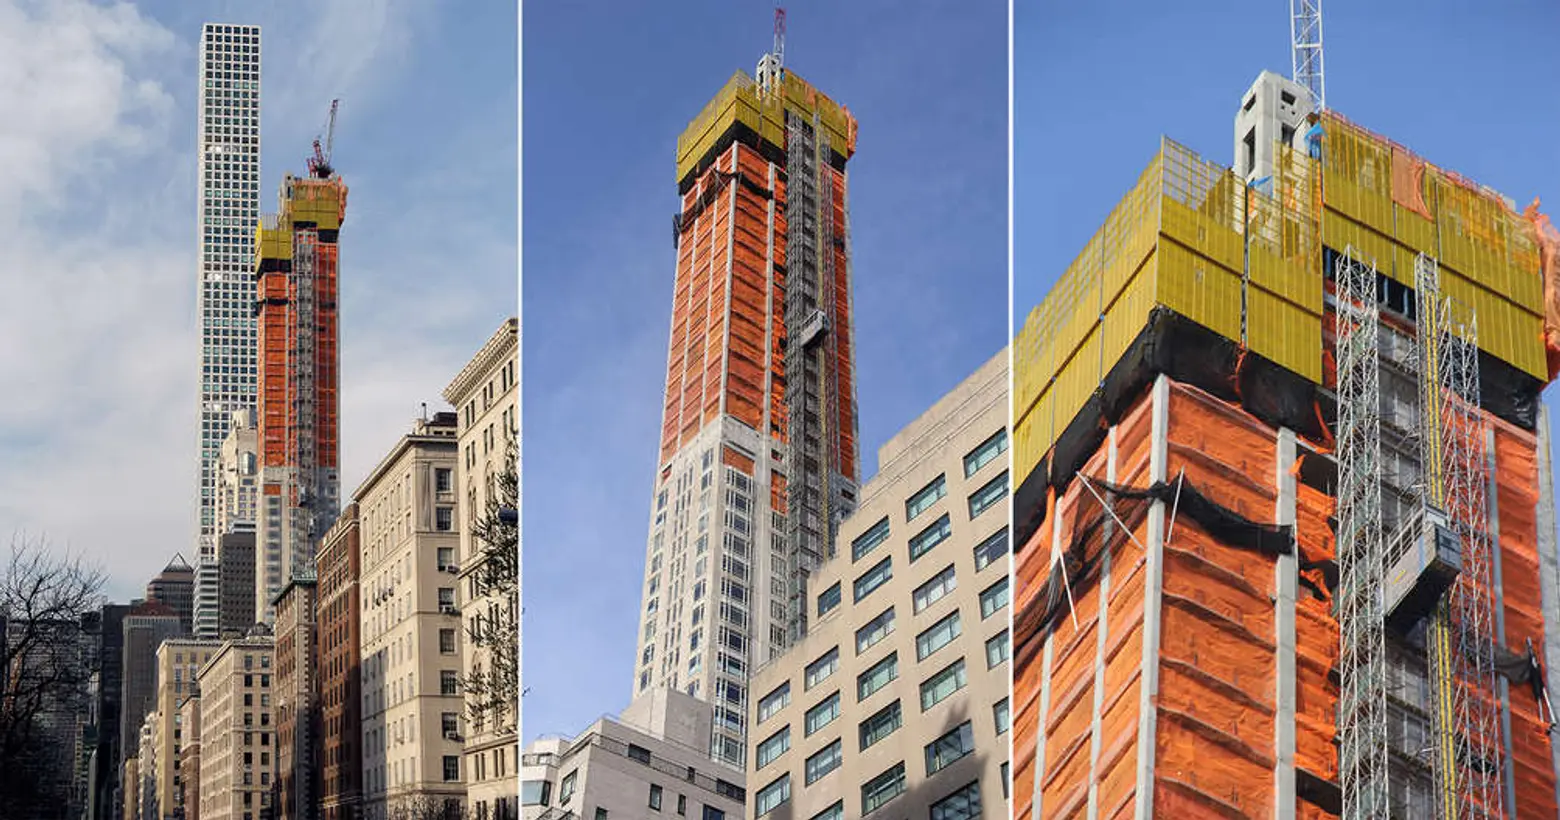 520 Park Avenue, Zeckendorf, Robert A.M. Stern, Upper East Side, tallest building, skyscraper, condos